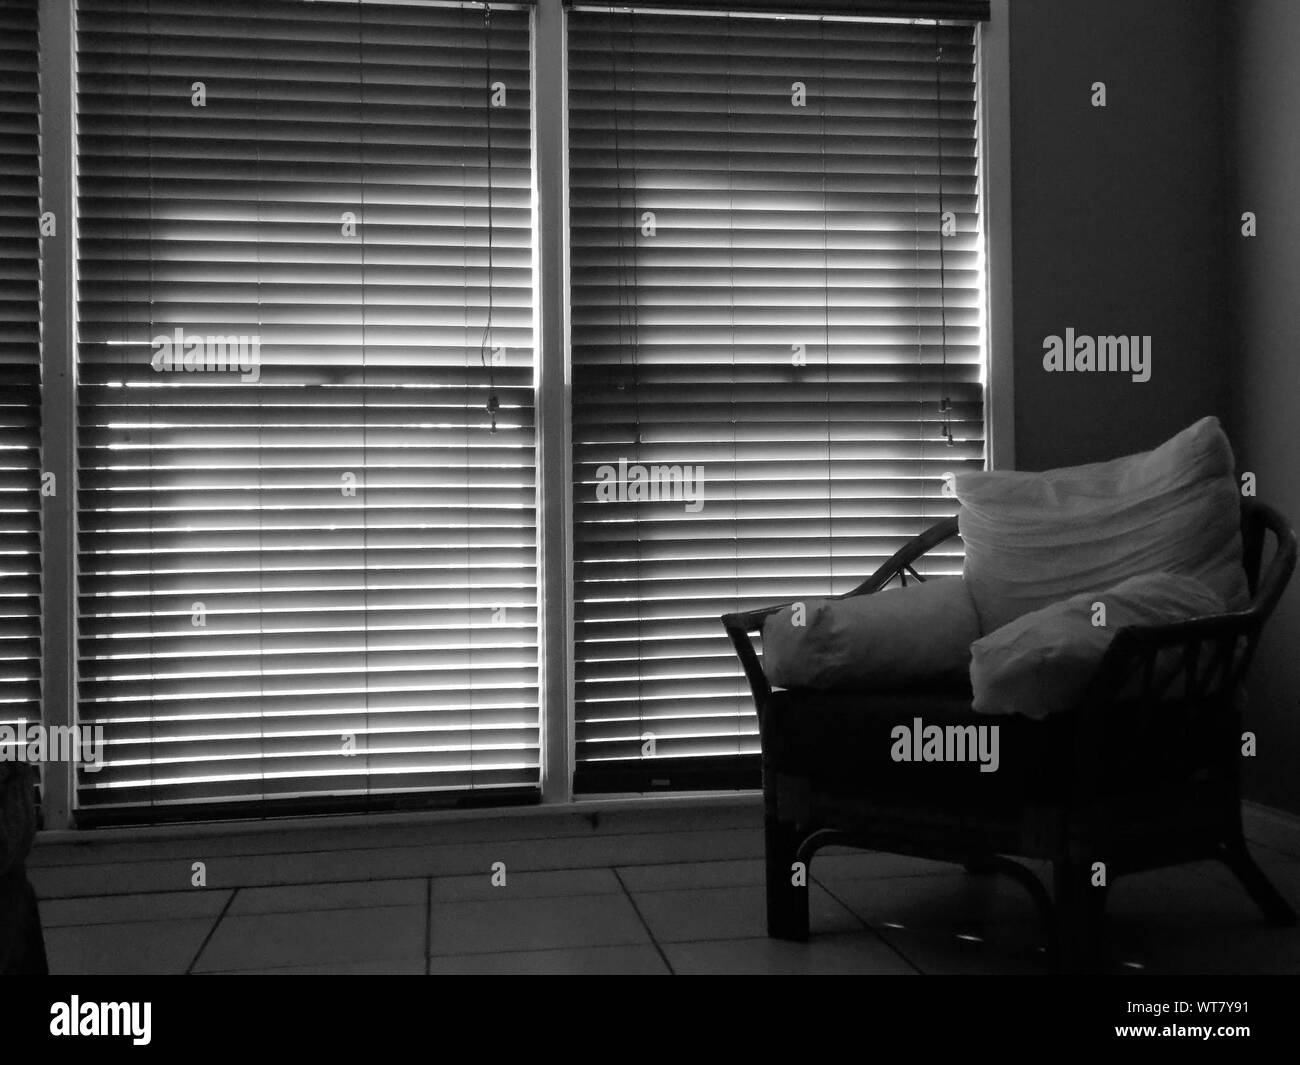 Jalousie door -Fotos und -Bildmaterial in hoher Auflösung – Alamy